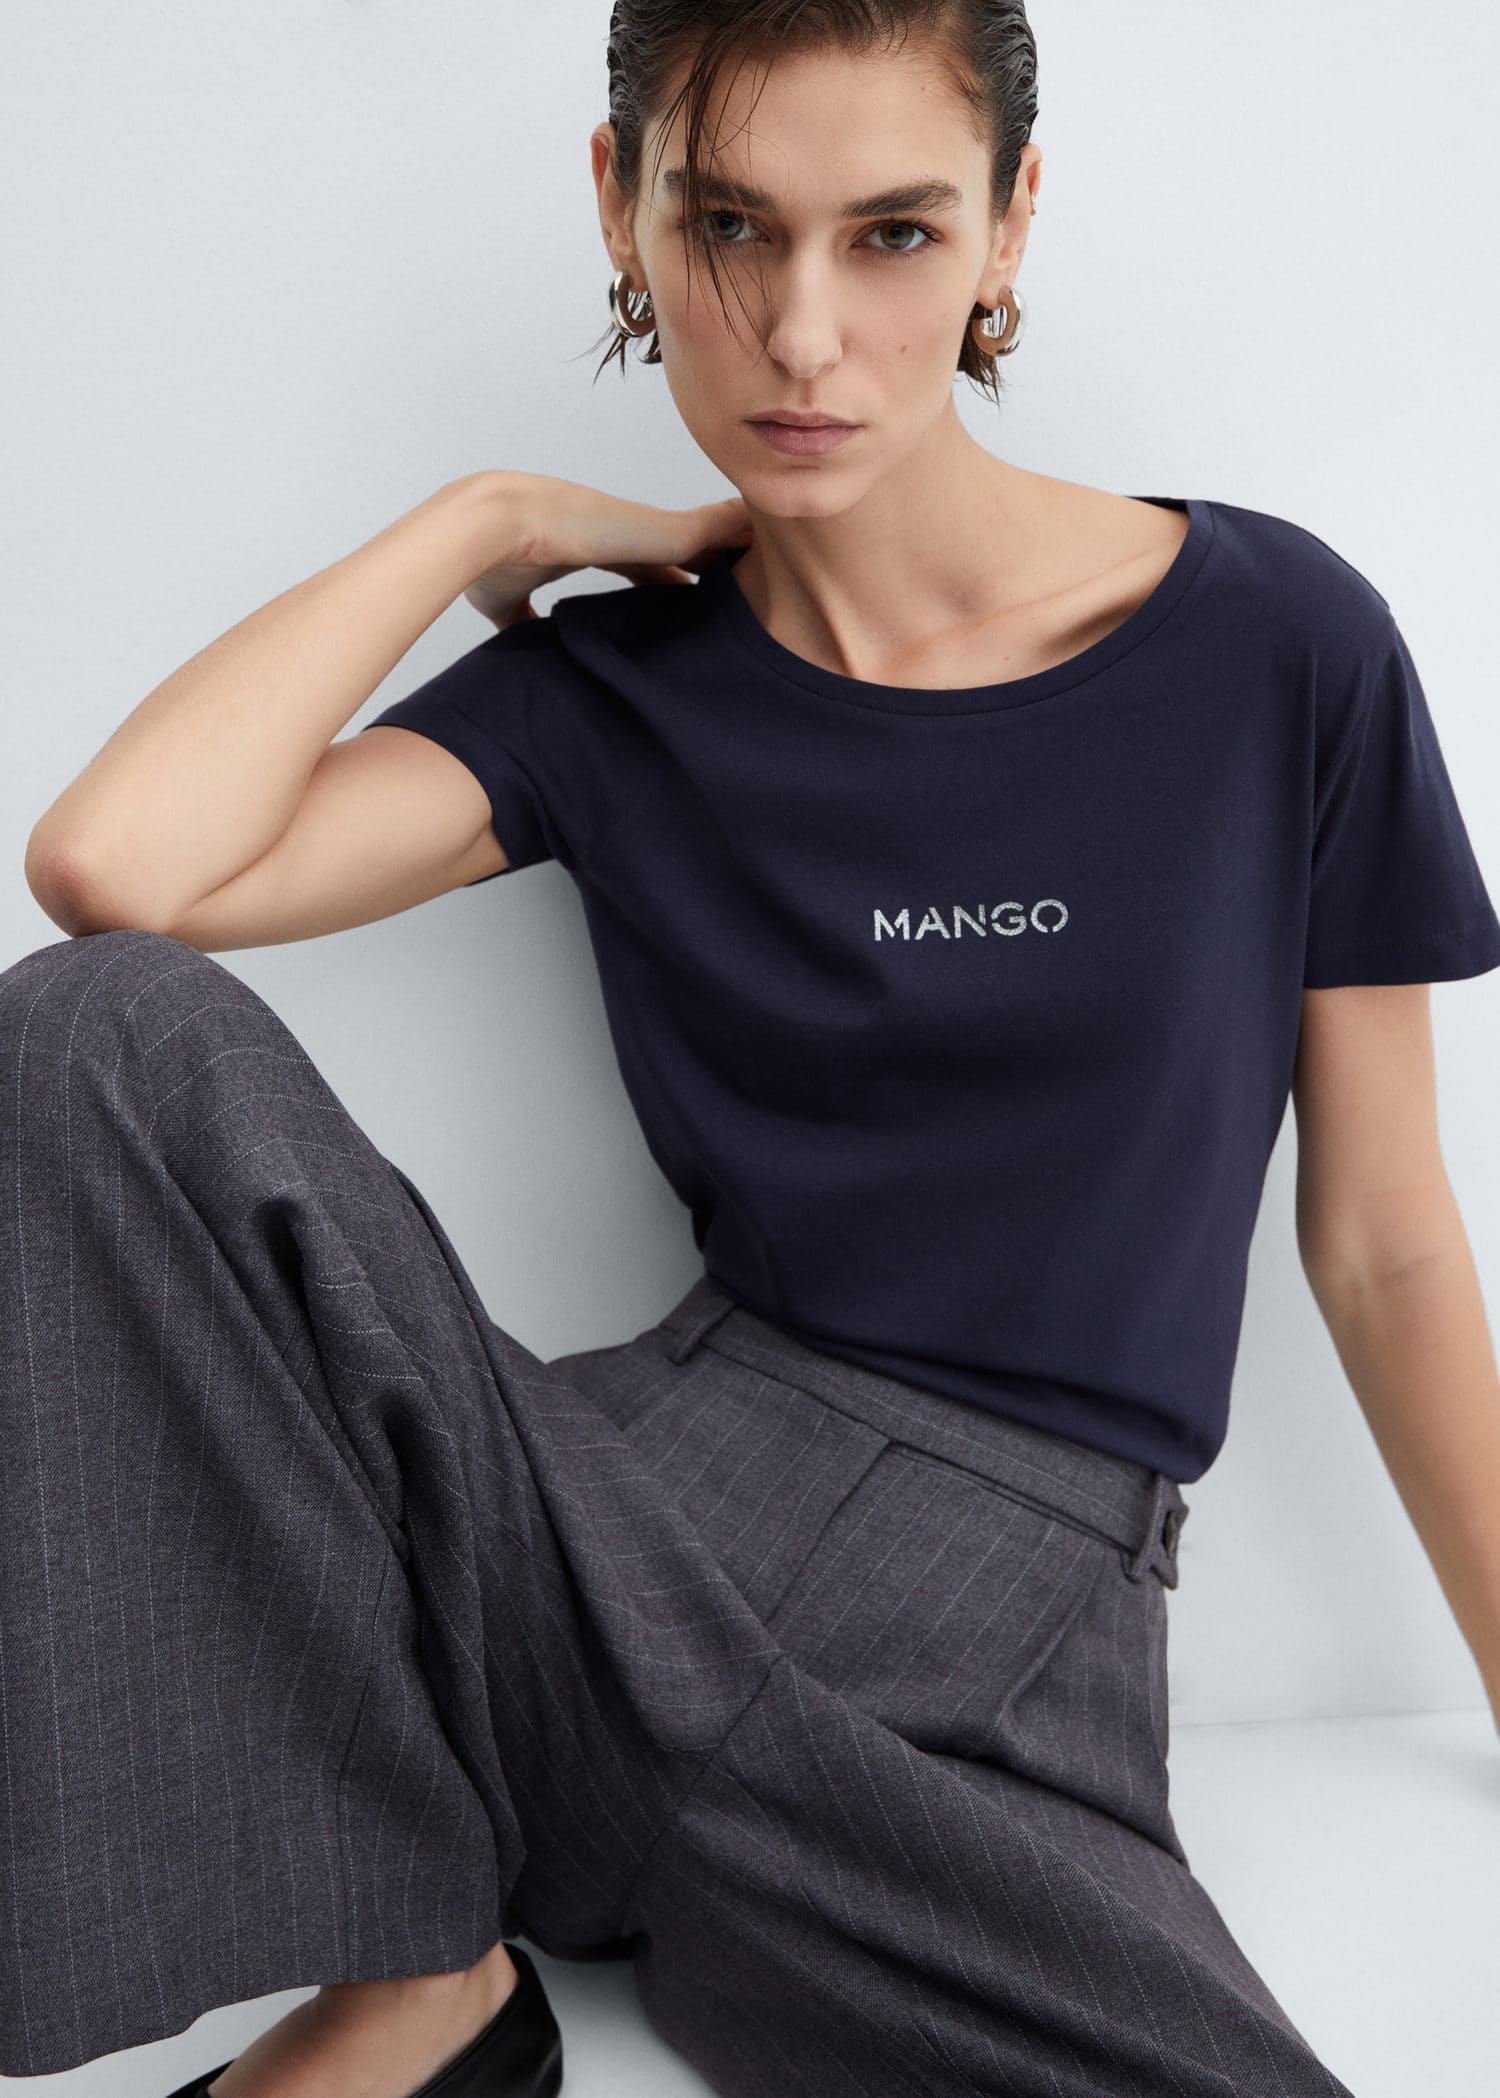 MANGO MANGOLOG-H 67010426-56 MANGO WOMEN T-SHIRT SHORT SLEEVE